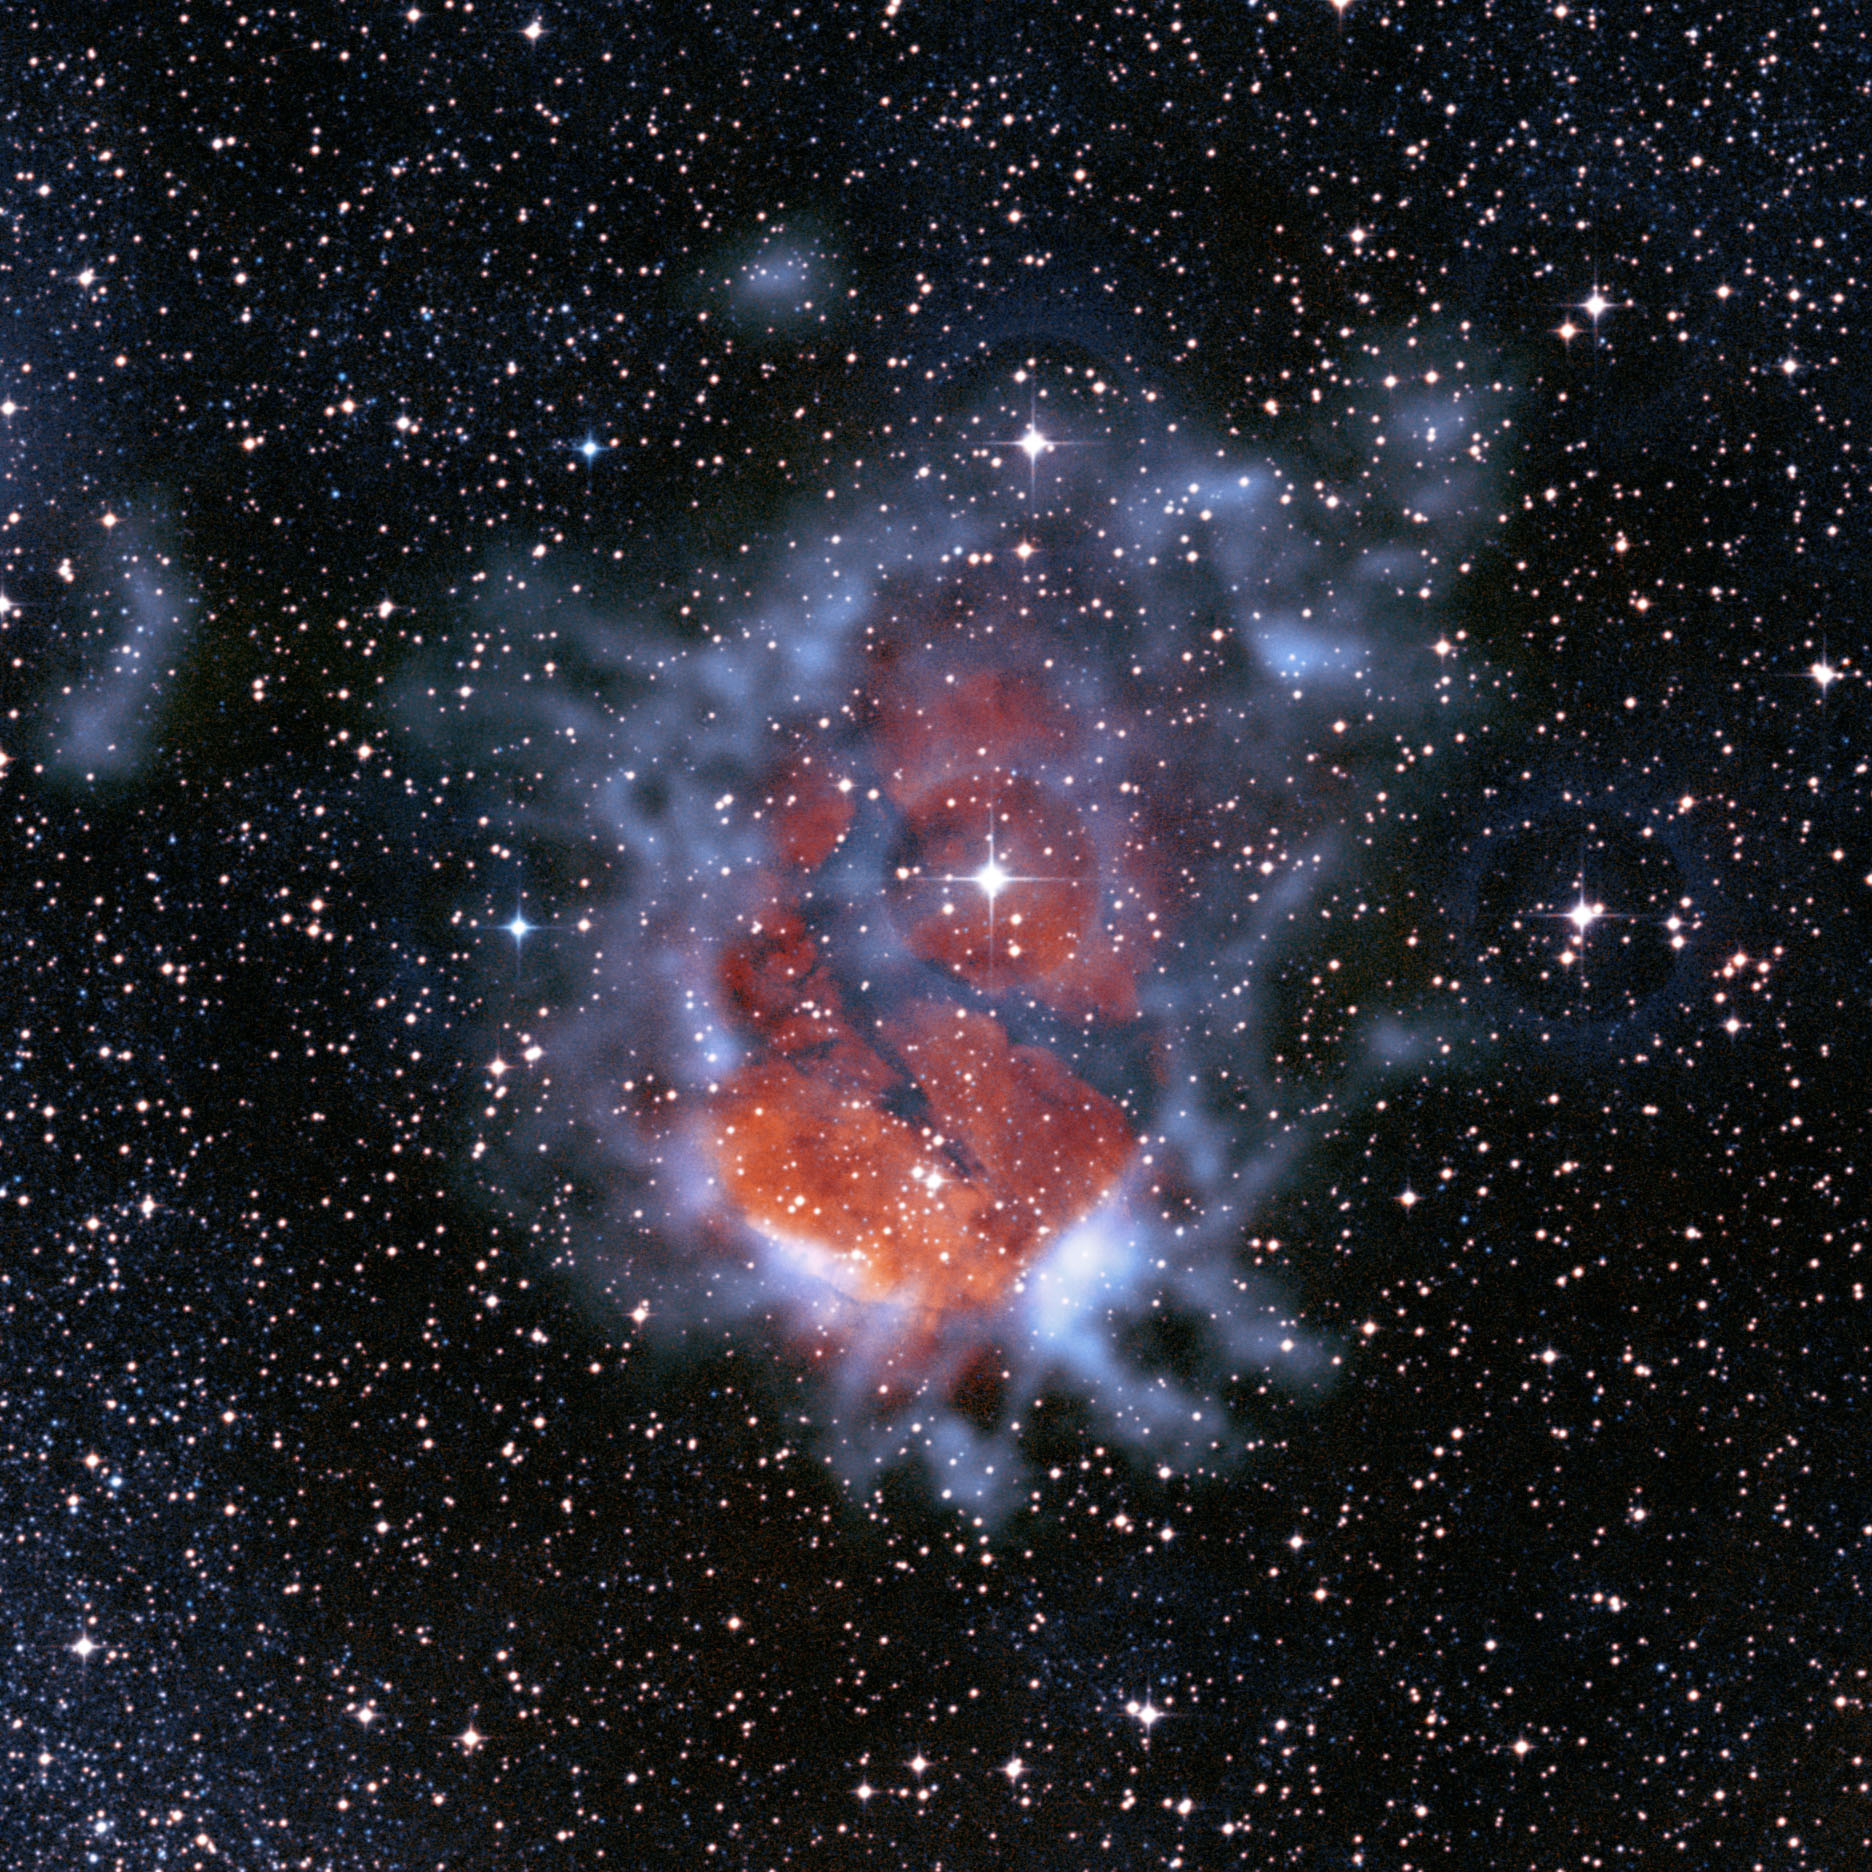 Image of RCW 120 Nebula Shows Expanding Bubble of Ionized Gas